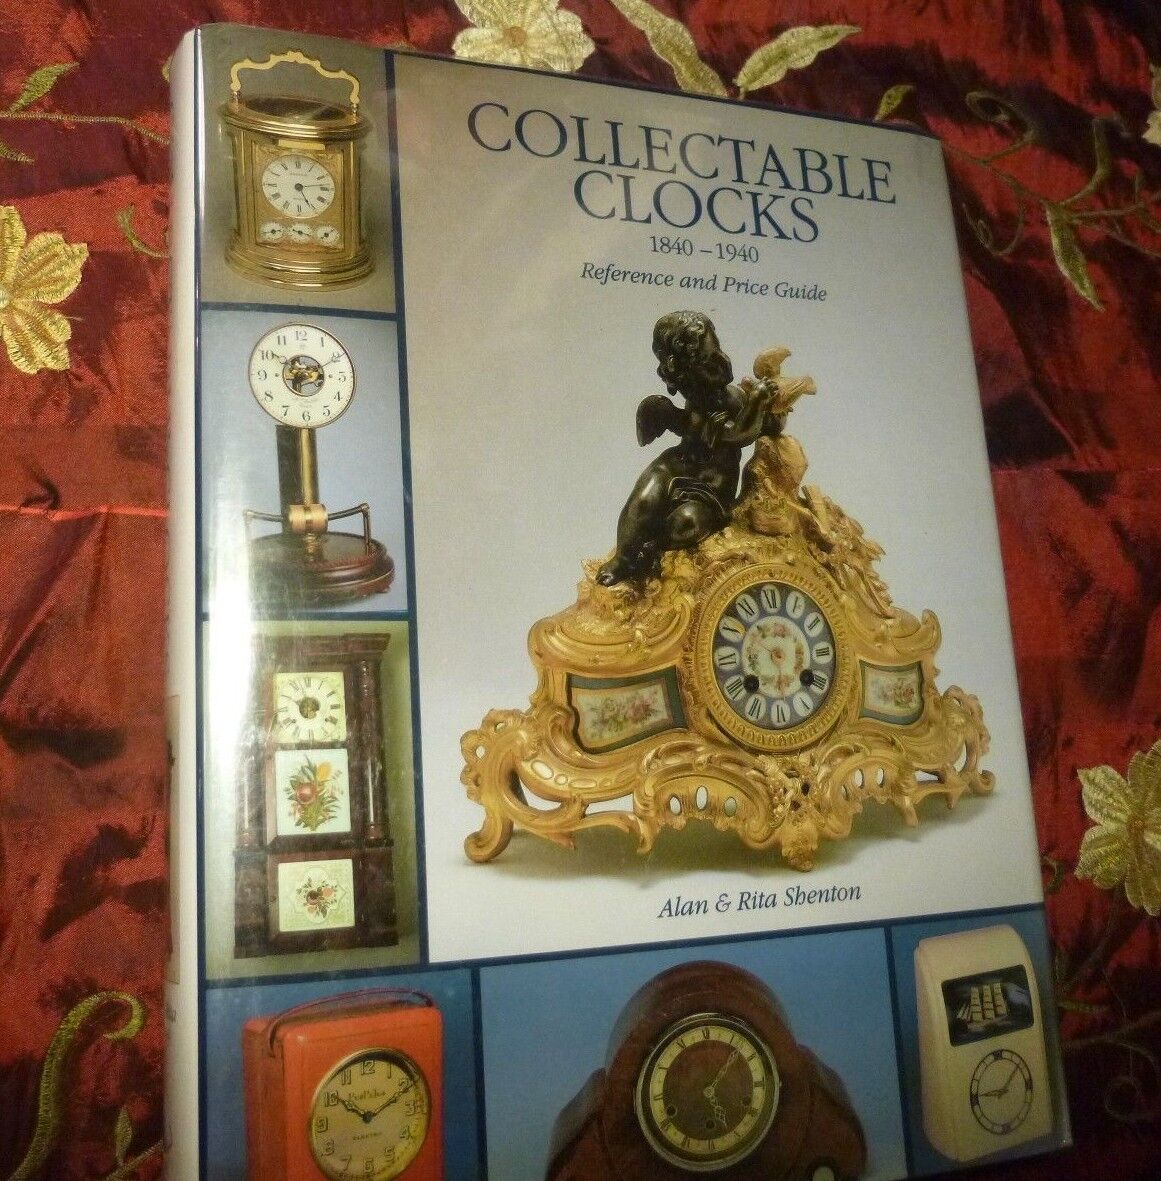 Collectable Clocks, 1840-1940: Reference and Price Guide, Shenton, Rita, Shenton